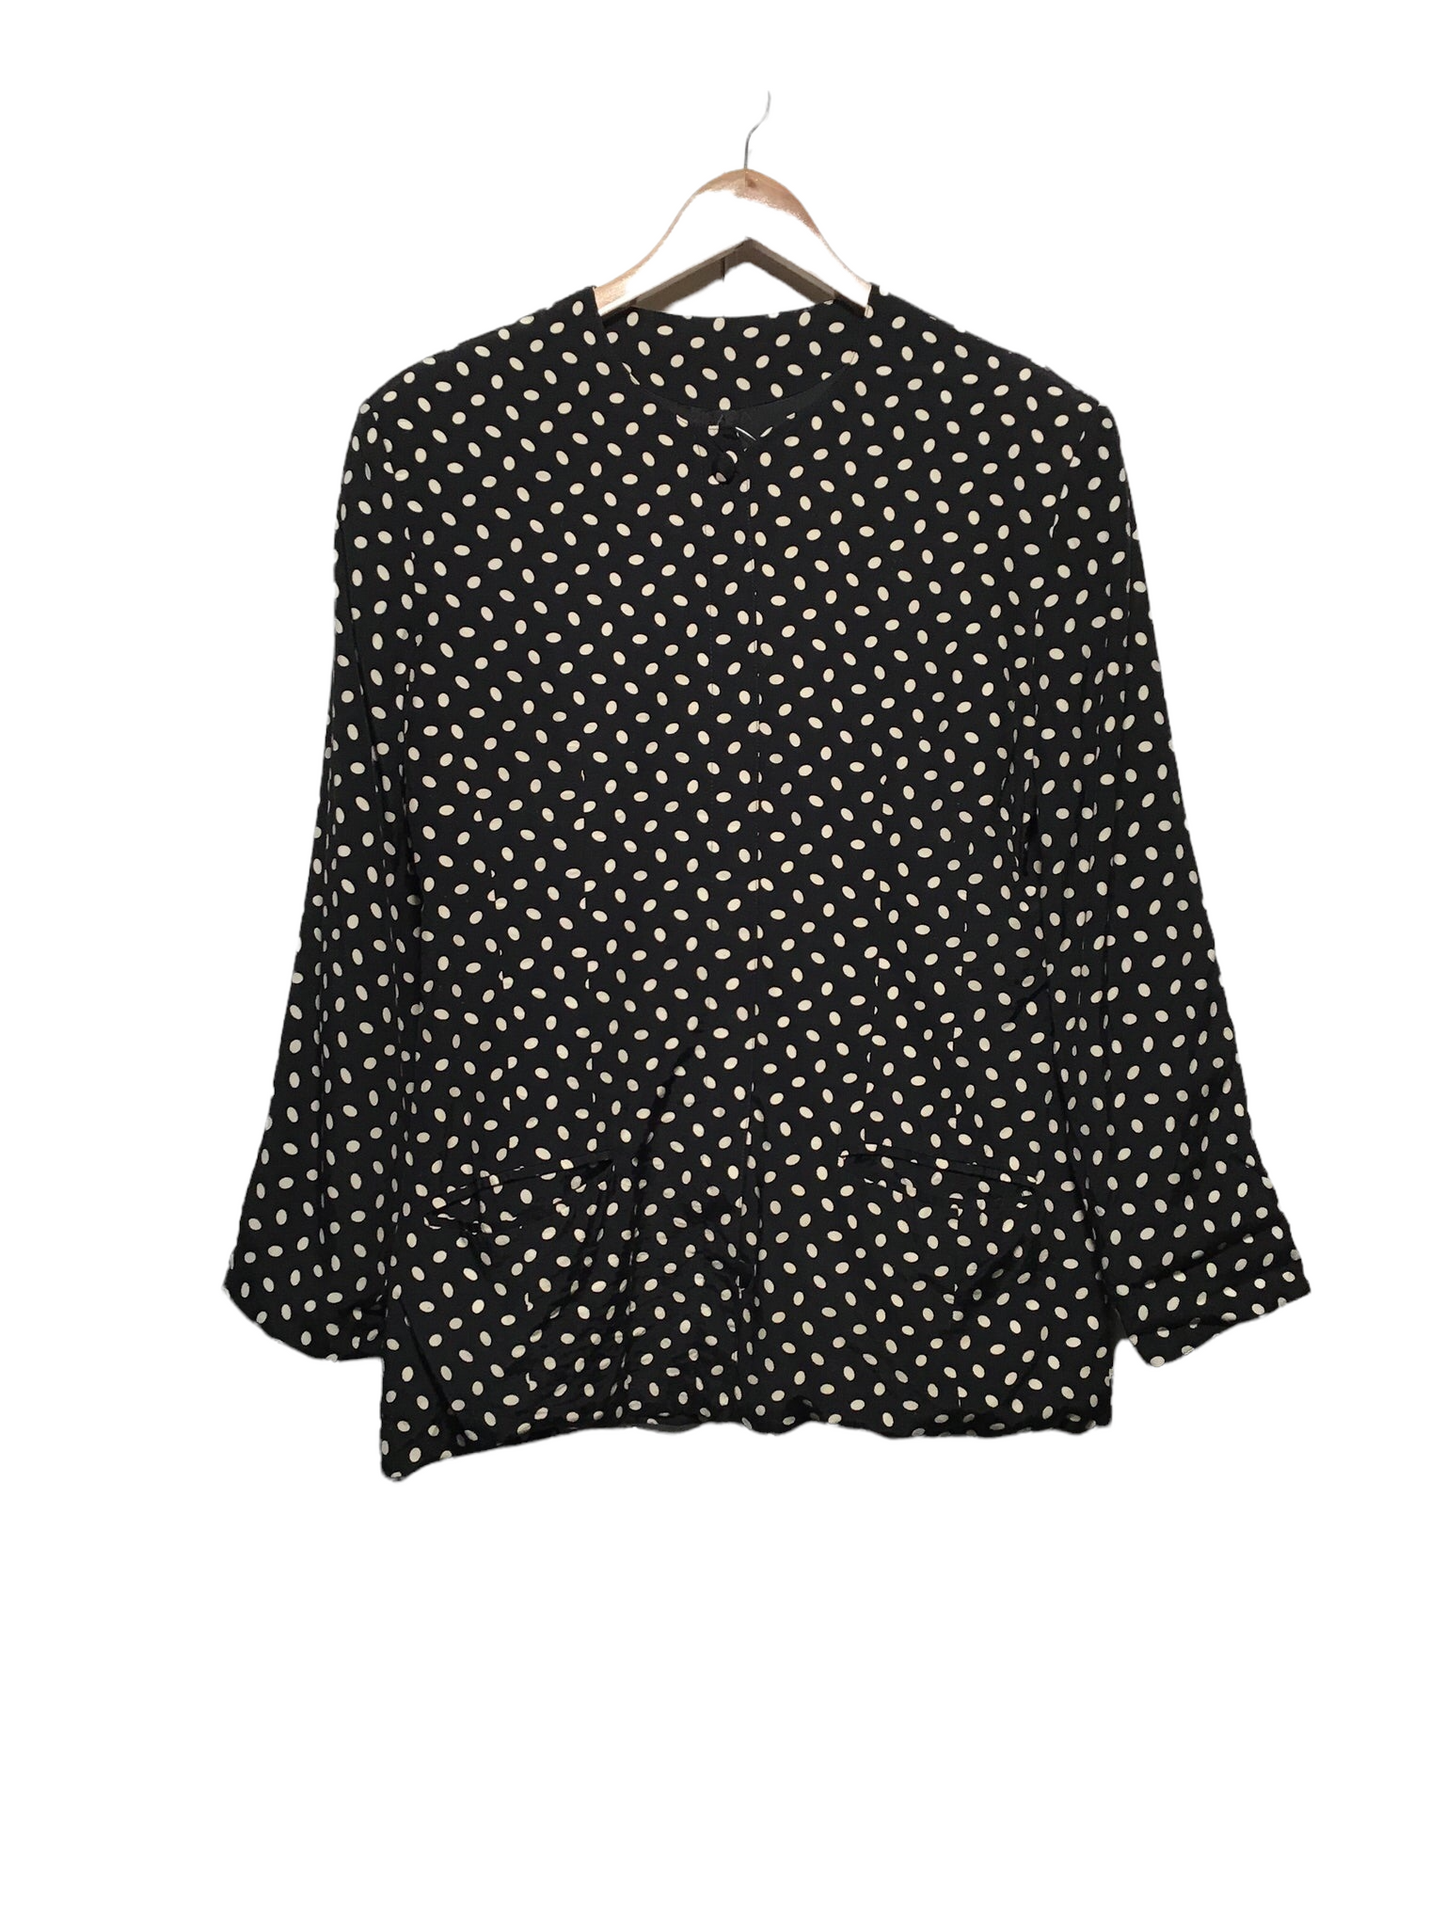 Polka Dot Blouse/ Jacket (Size M)